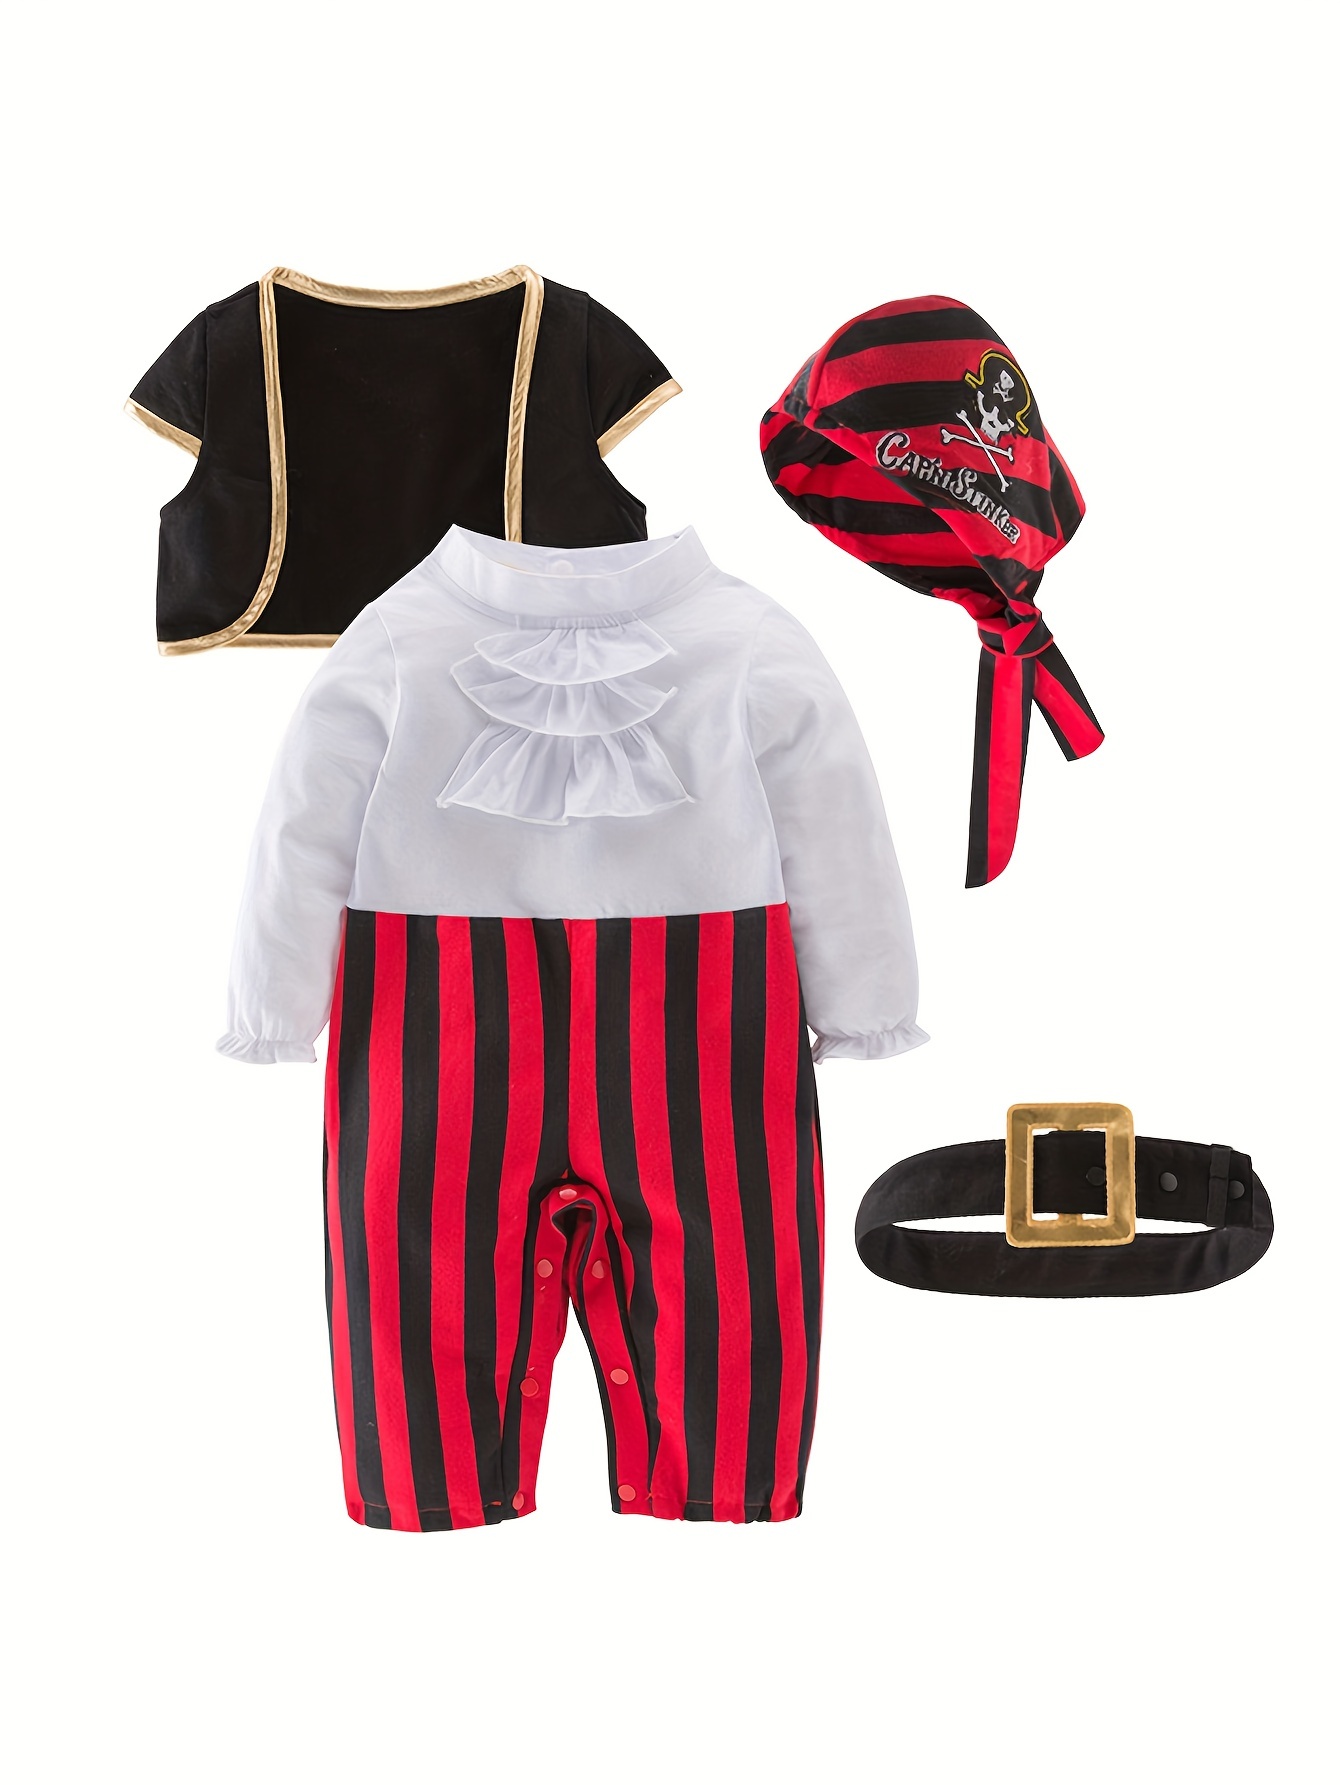 5 piezas de accesorios de disfraz de pirata para niños, diadema de calavera  de pirata, parche de ojo de pirata, falda de gancho de capitán para niños